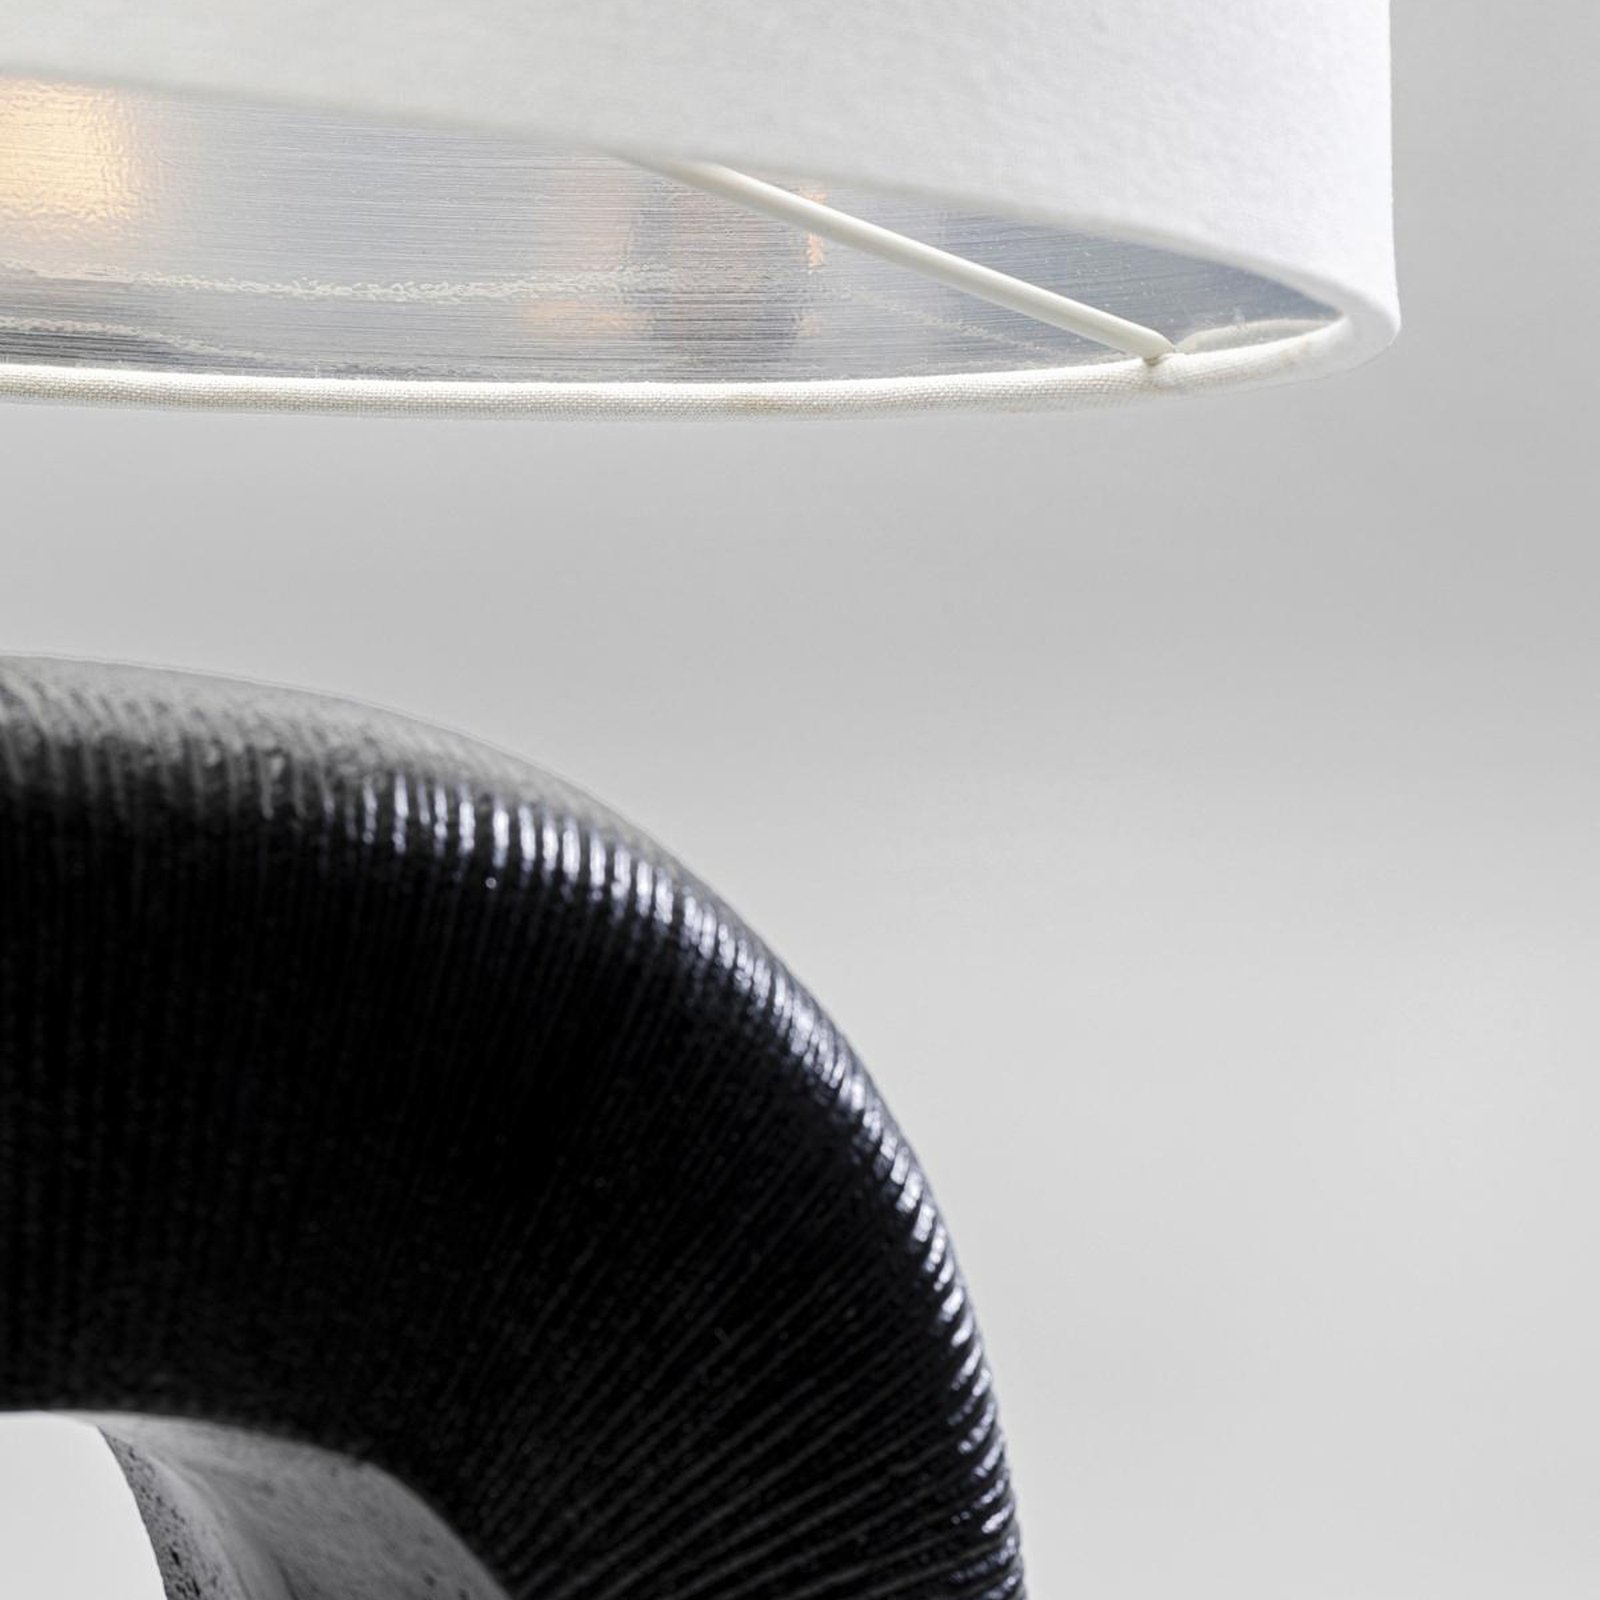 Kare Tube tafellamp, zwart/wit, linnen textiel, hoogte 79 cm